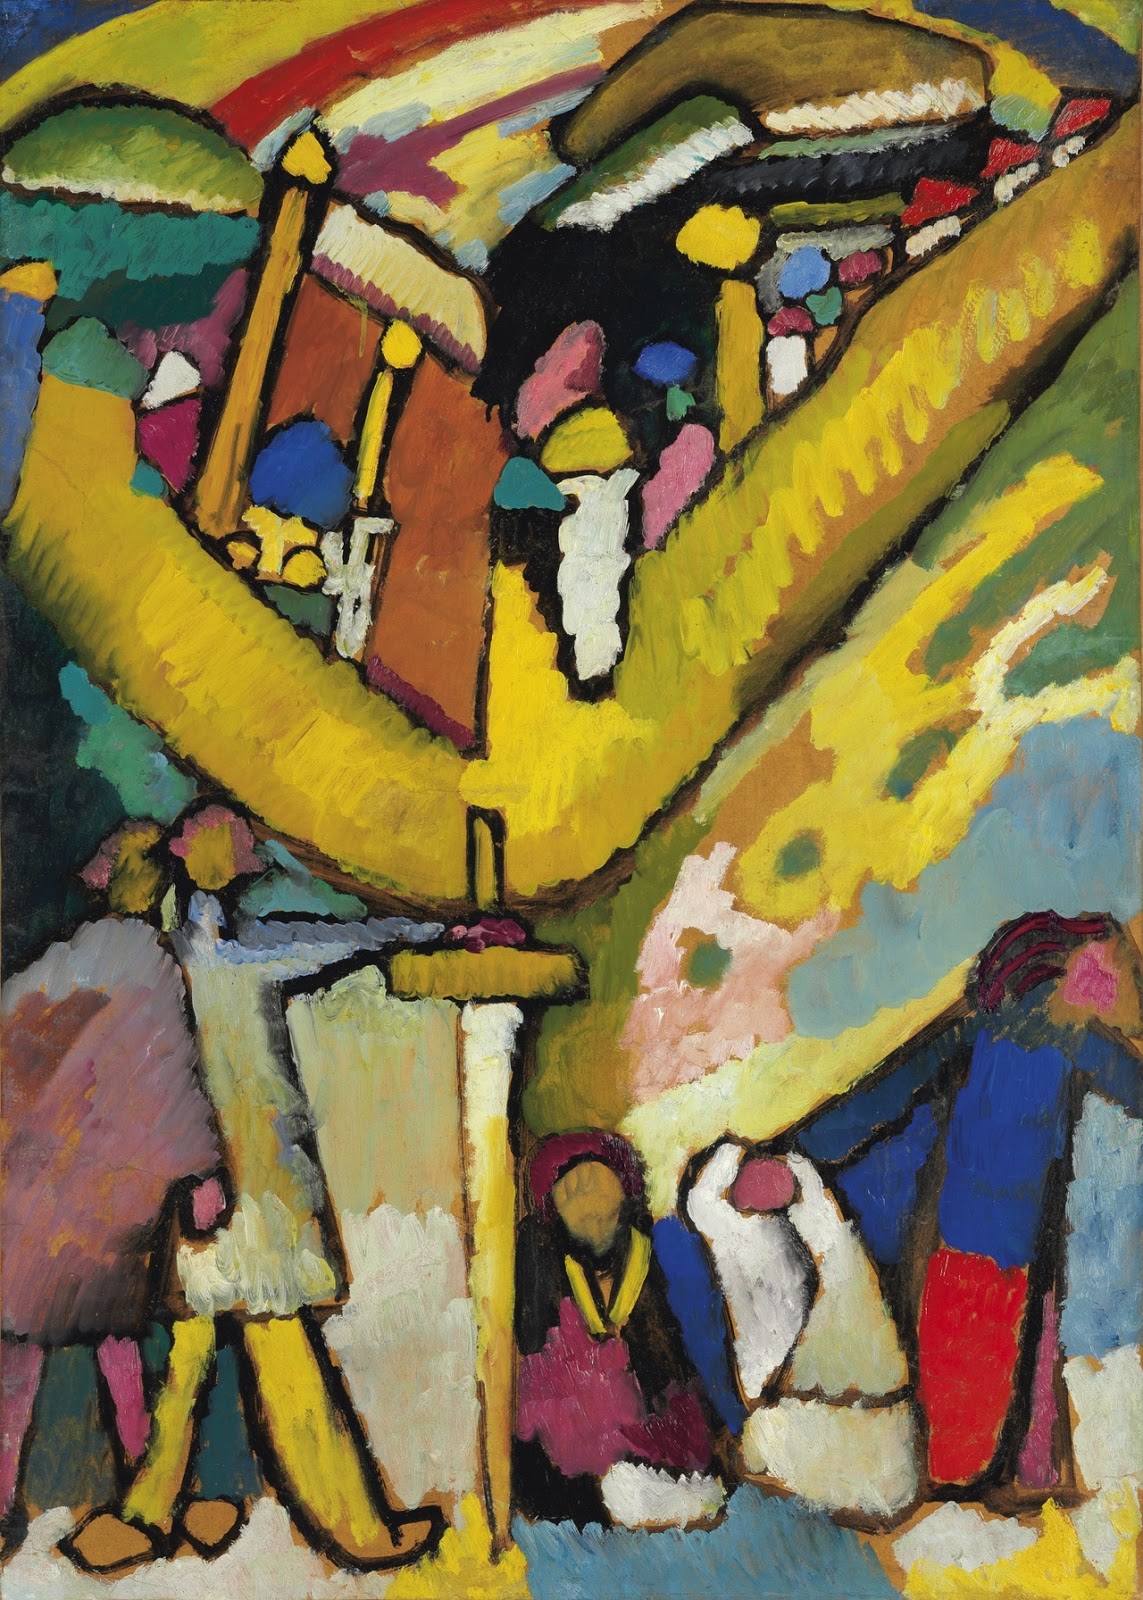 Wassily+Kandinsky-1866-1944 (381).jpg